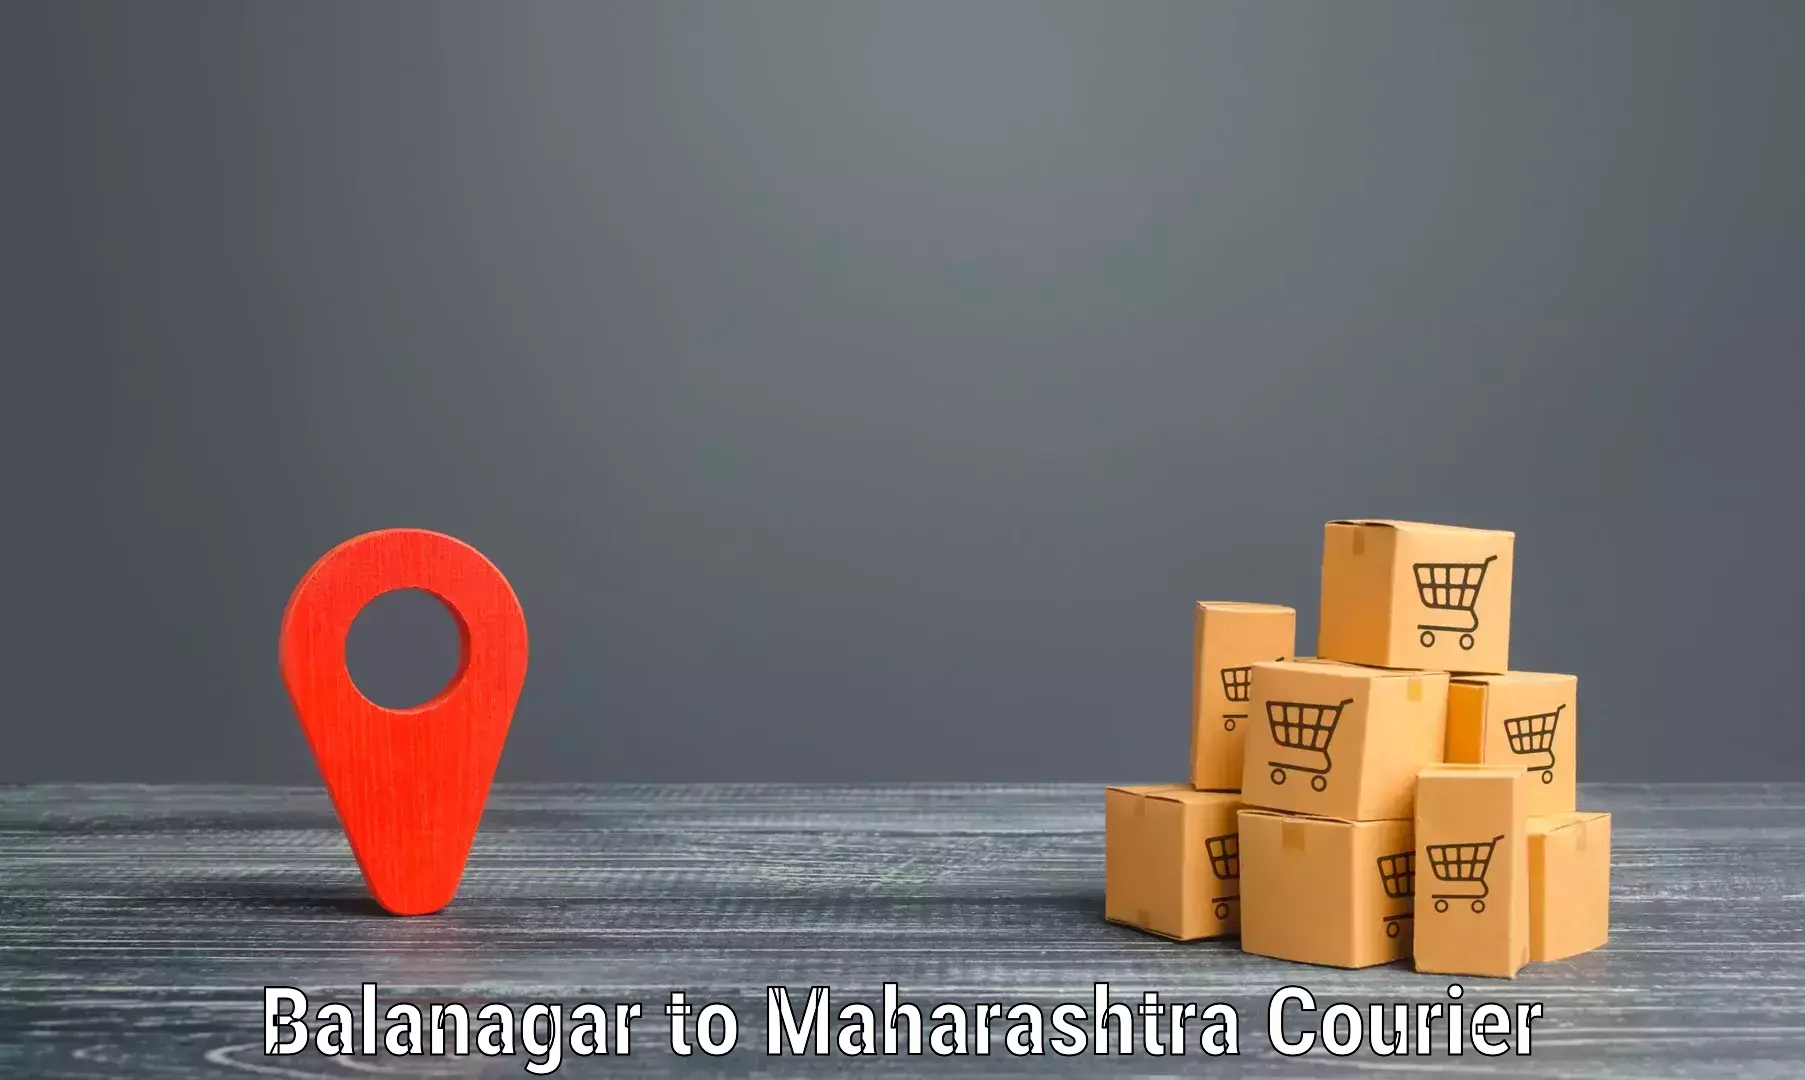 Urban courier service Balanagar to Georai